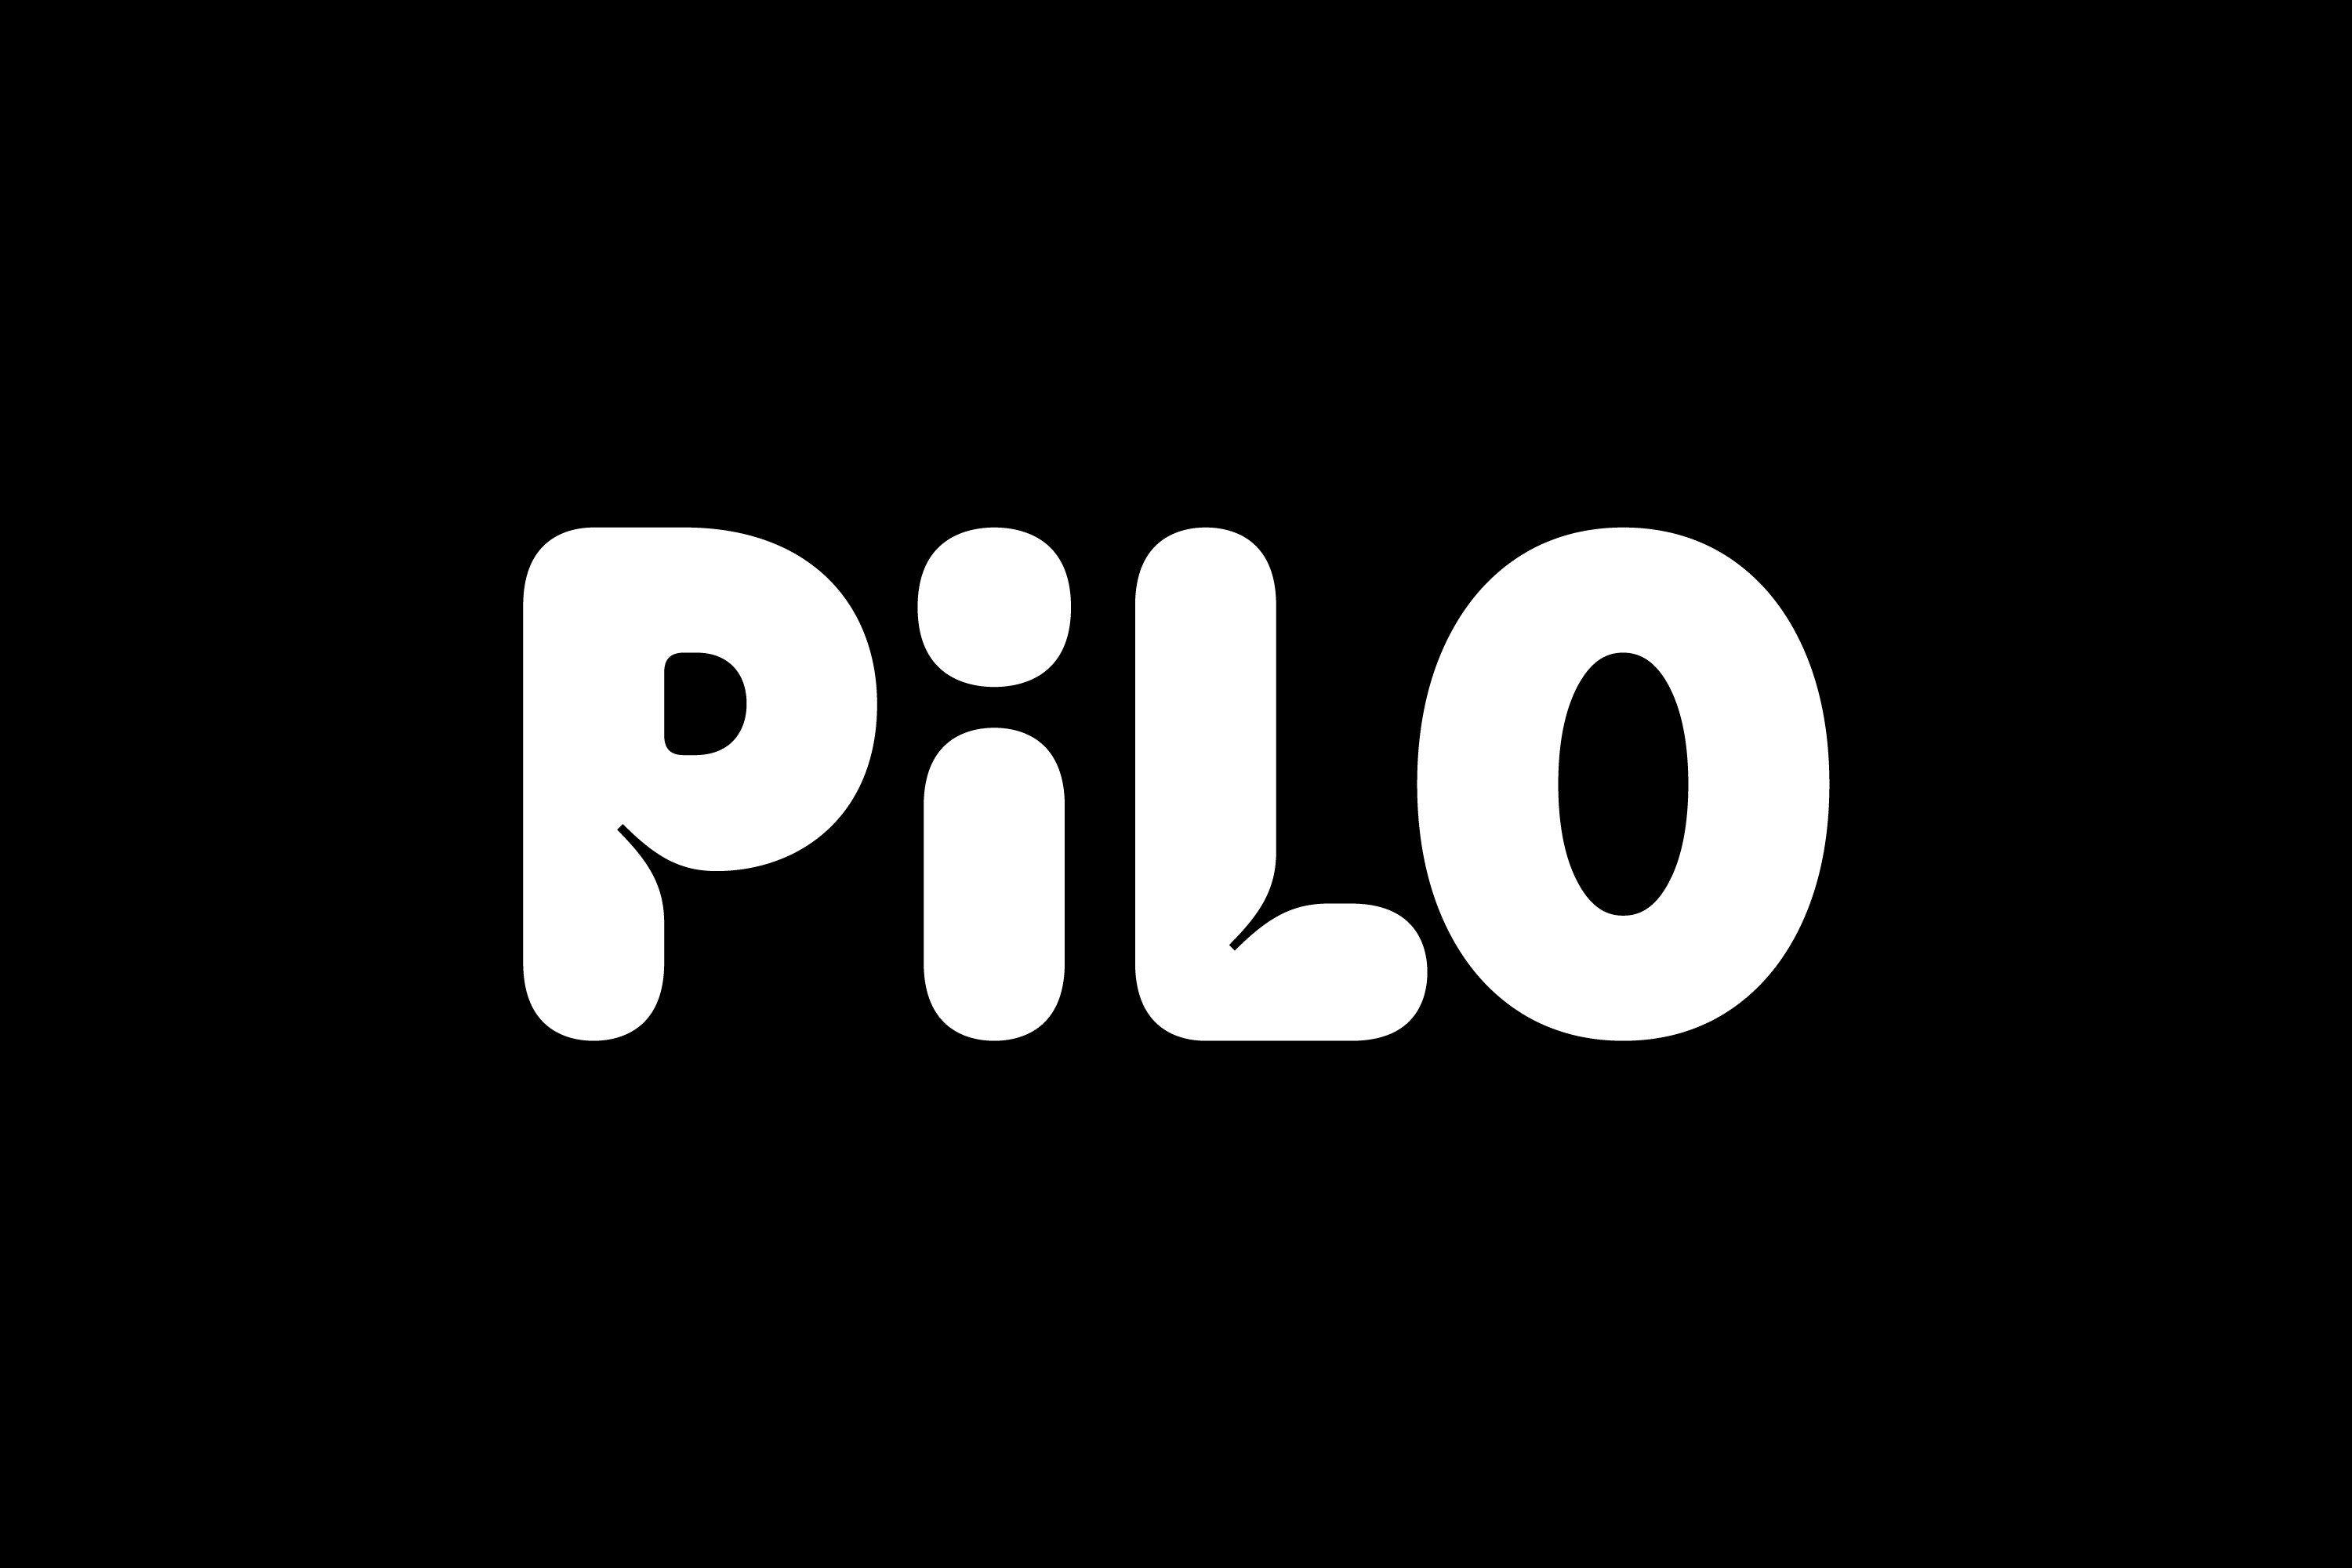 Logotype, custom typeface and illustration for Parisian youth hostel PiLO designed by French design studio 5.5.